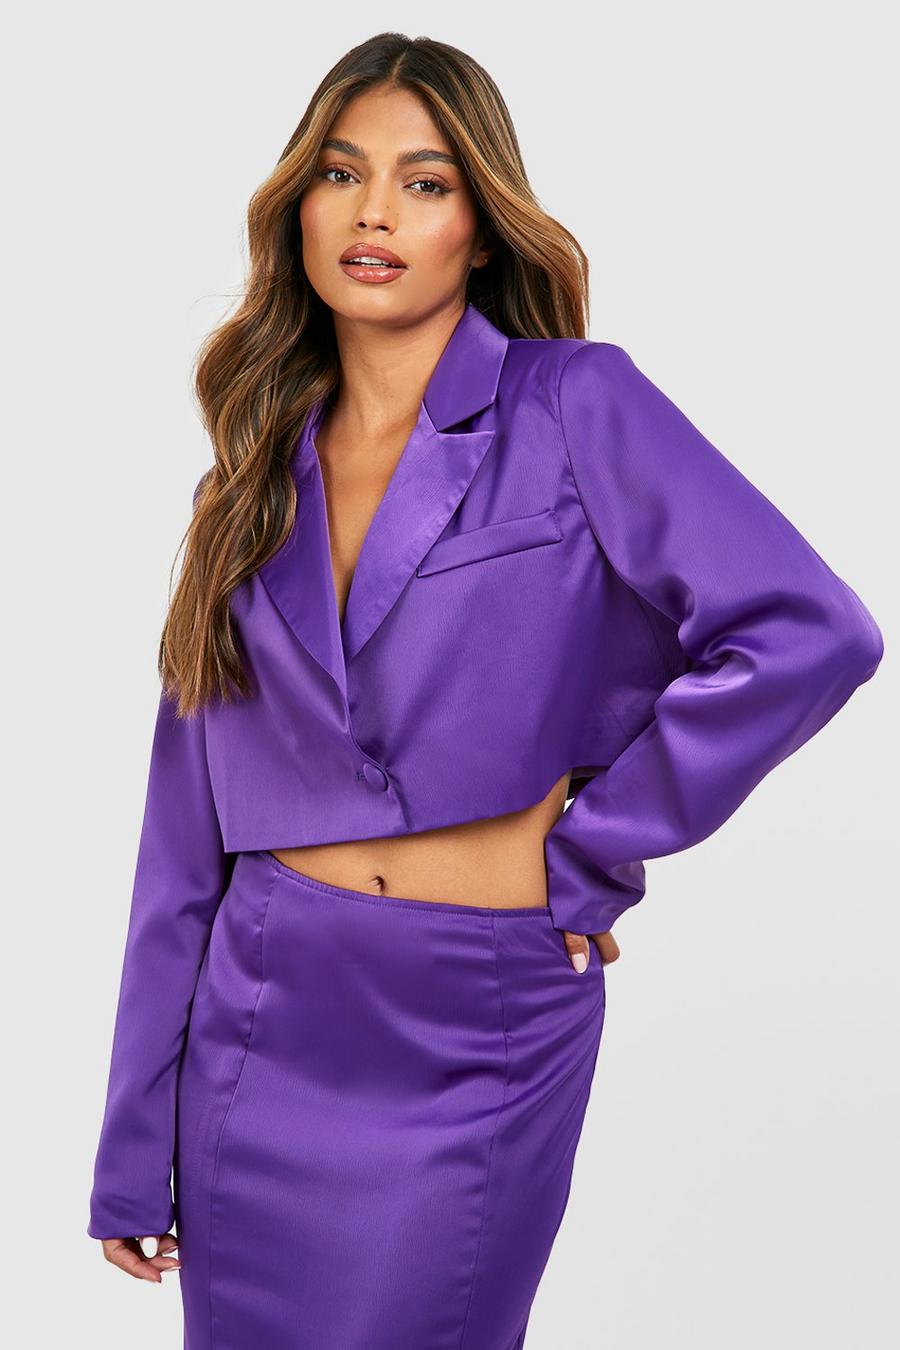 Jewel purple Matte Satin Cropped Tailored Blazer